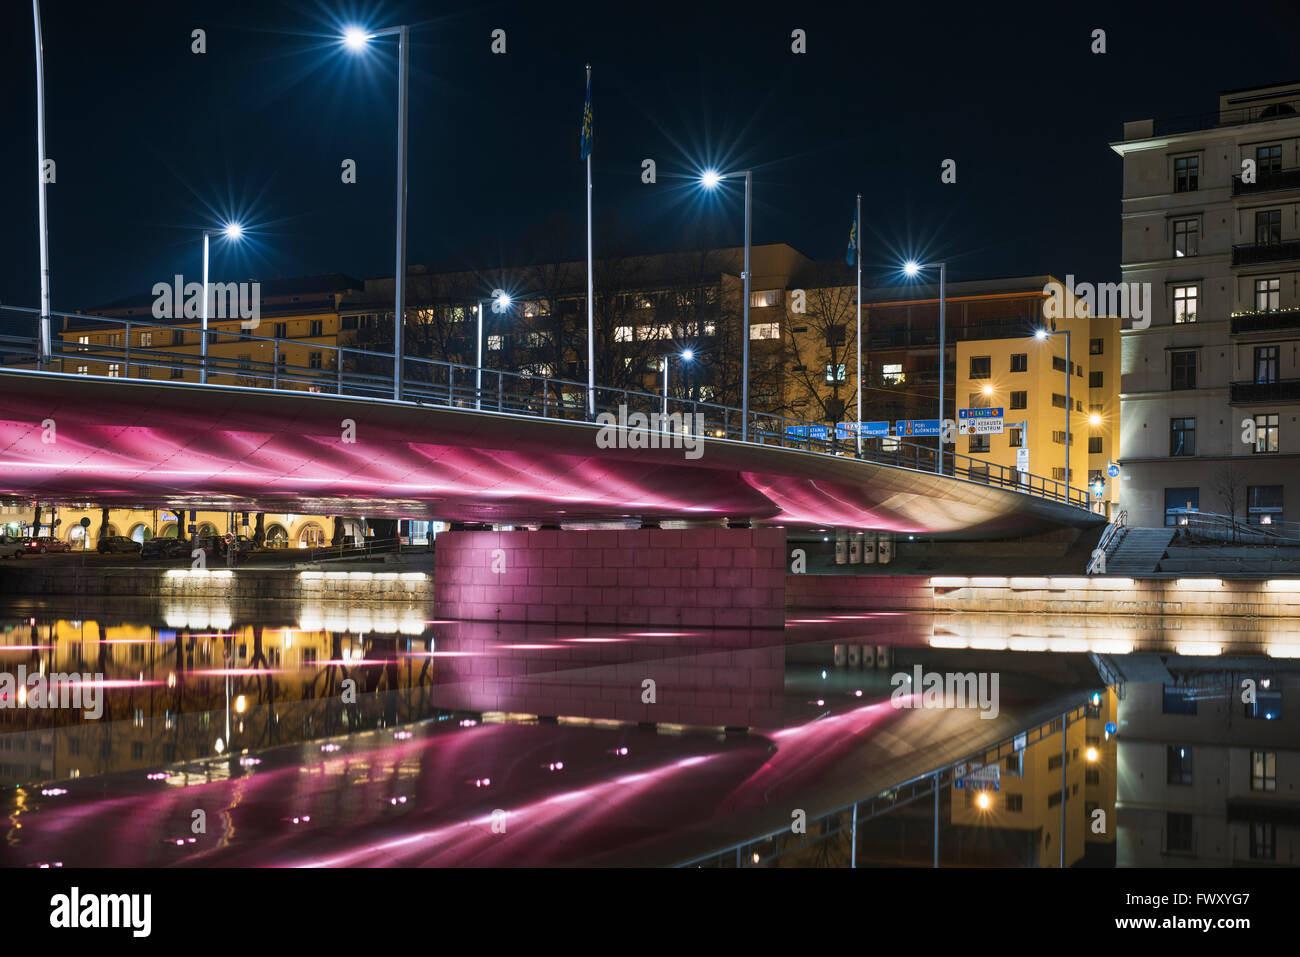 Finland, Varsinais-Suomi, Turku, Illuminated bridge at night Stock Photo